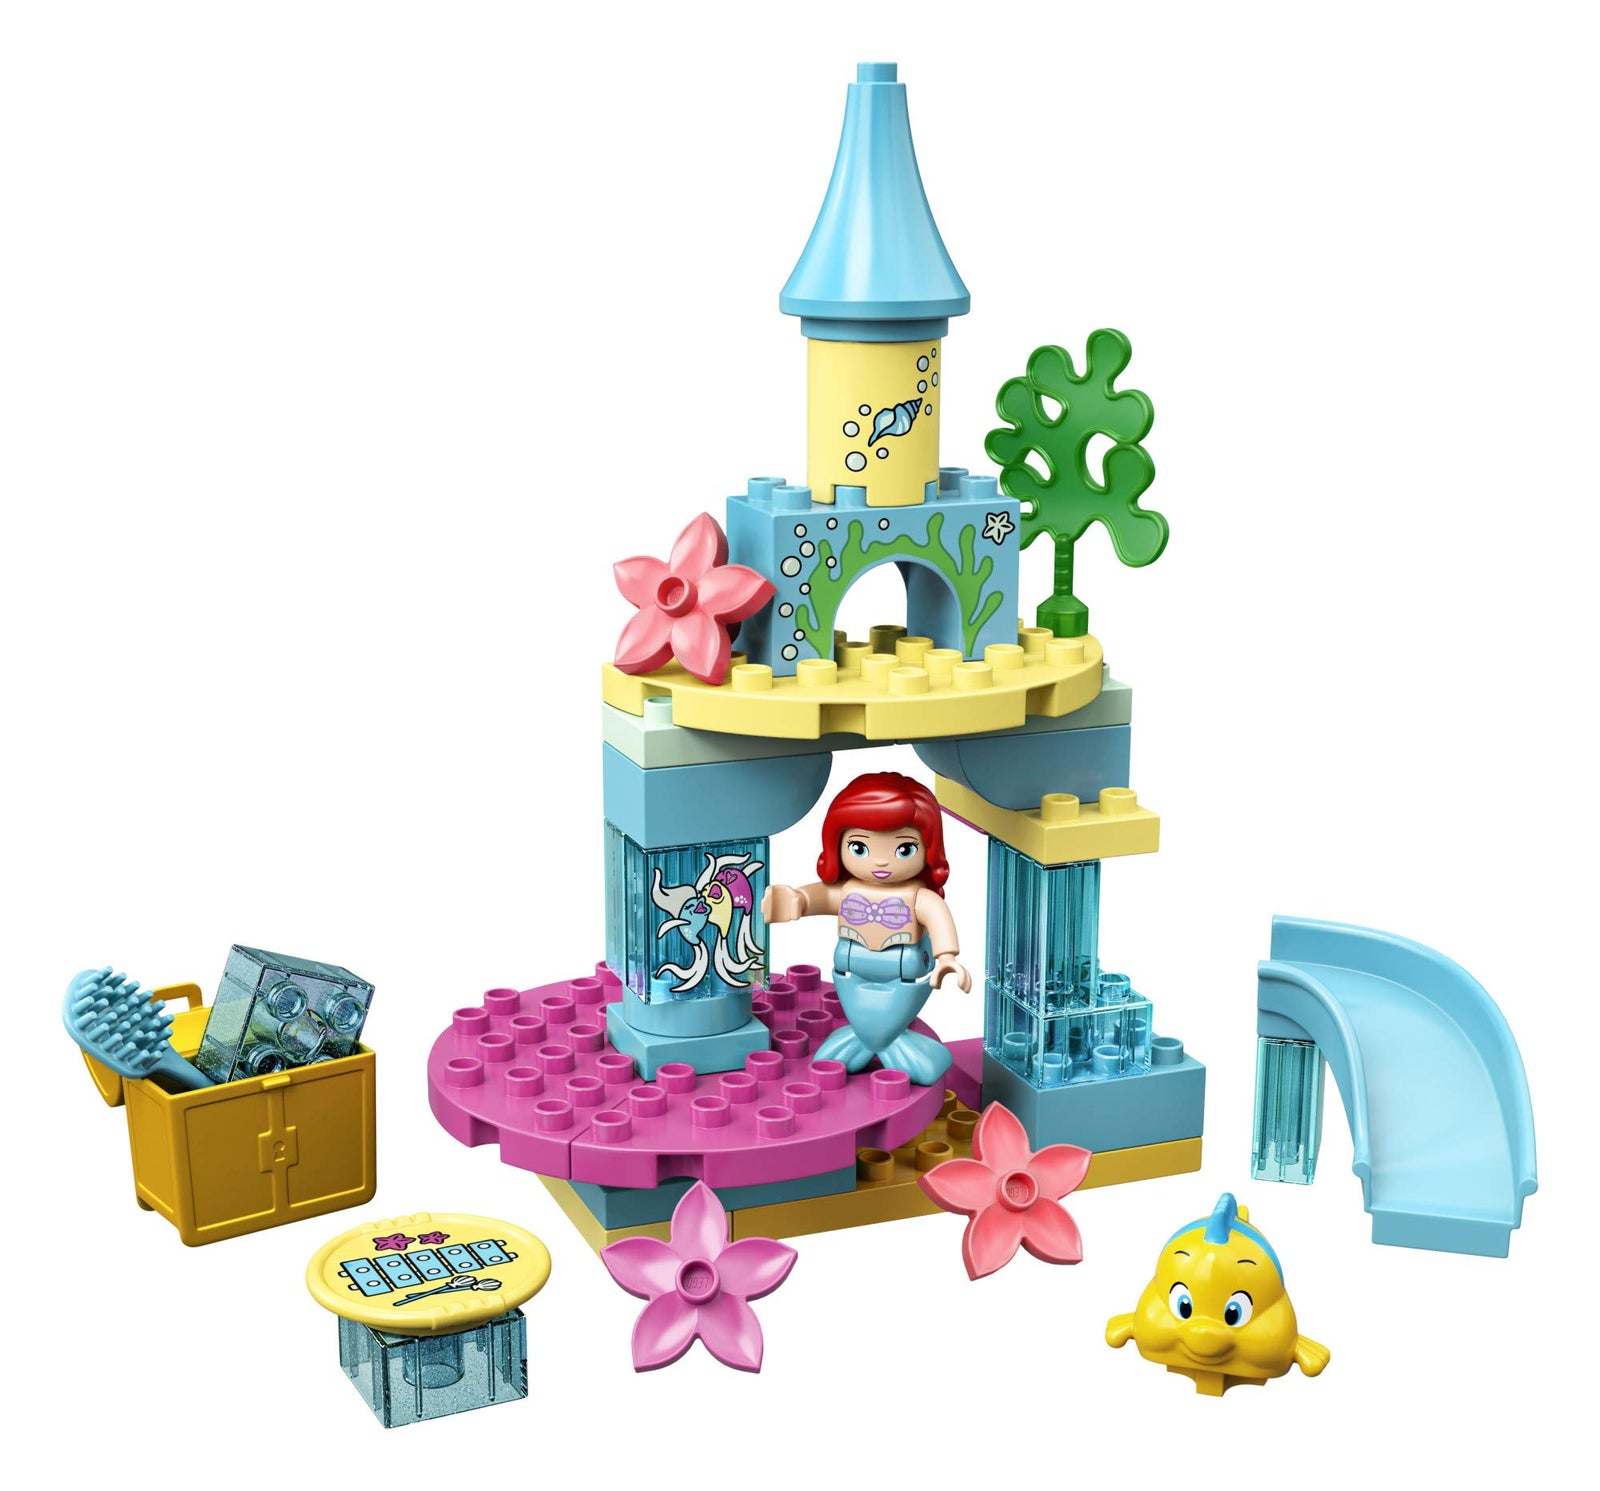 LEGO DUPLO Disney Ariel's Undersea Castle 10922 Imaginative Building Toy for Kids; Ariel and Flounder’s Princess Castle Playset Under The Sea, New 2020 (35 Pieces)